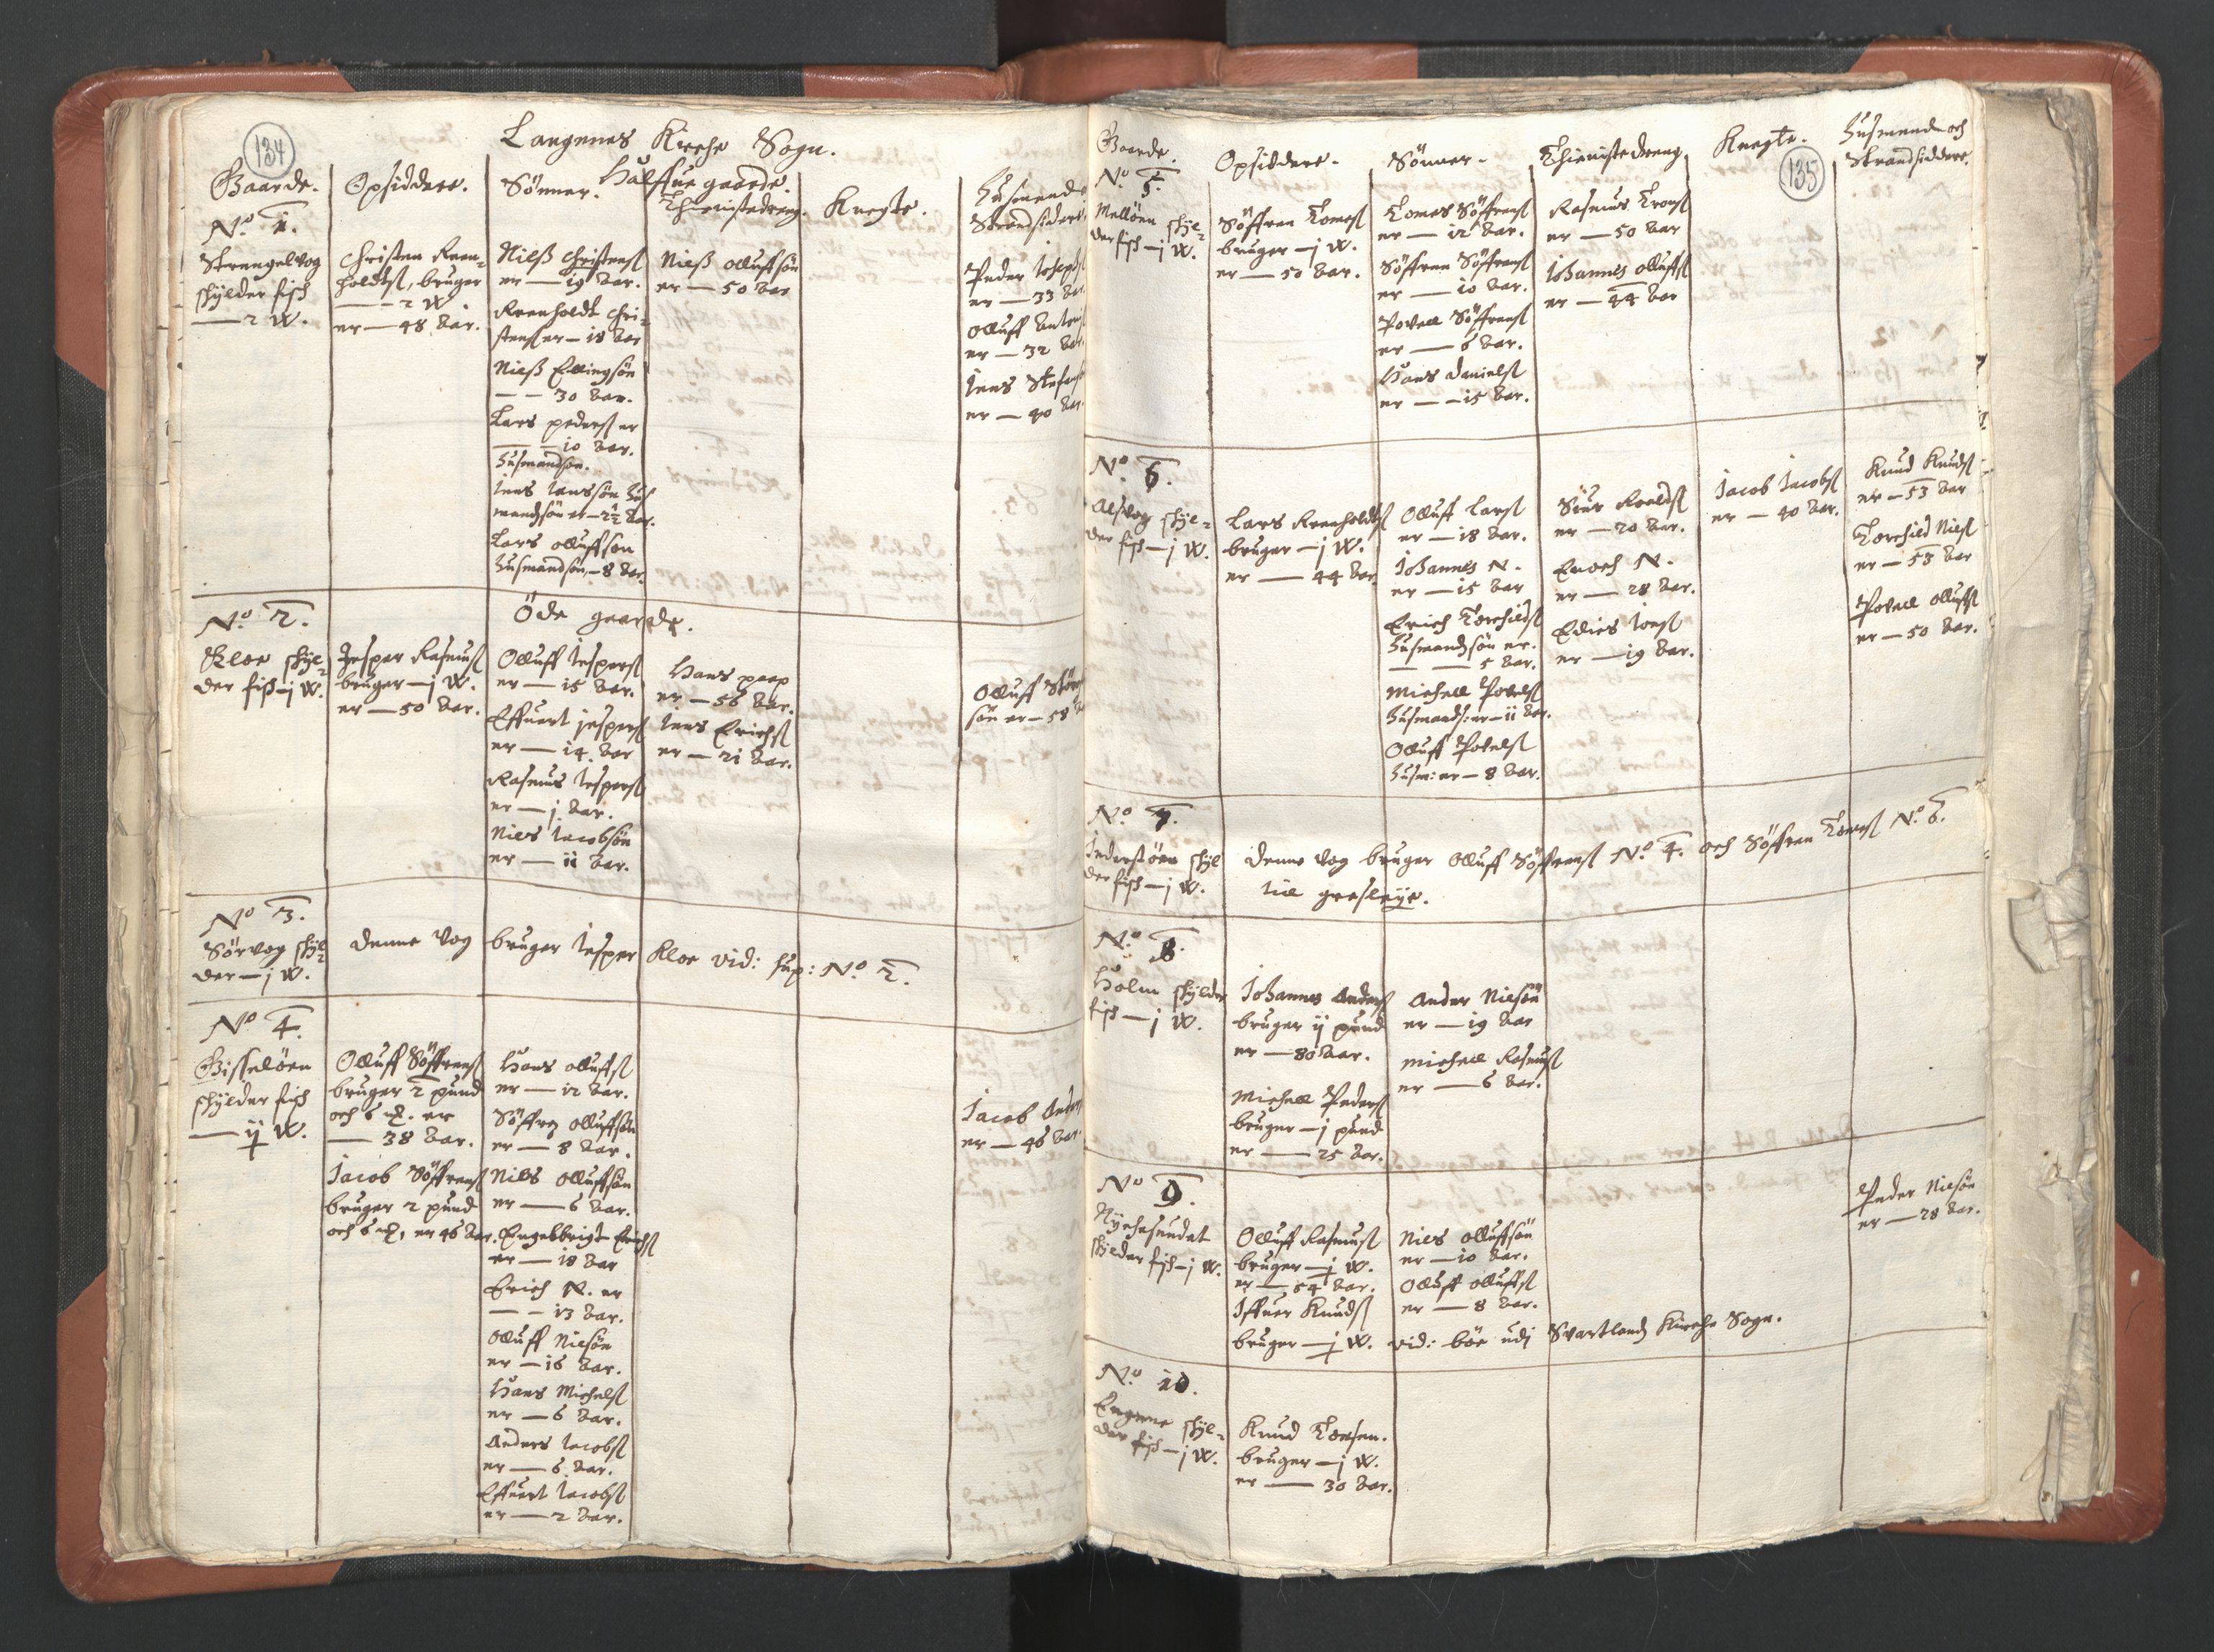 RA, Vicar's Census 1664-1666, no. 36: Lofoten and Vesterålen deanery, Senja deanery and Troms deanery, 1664-1666, p. 134-135